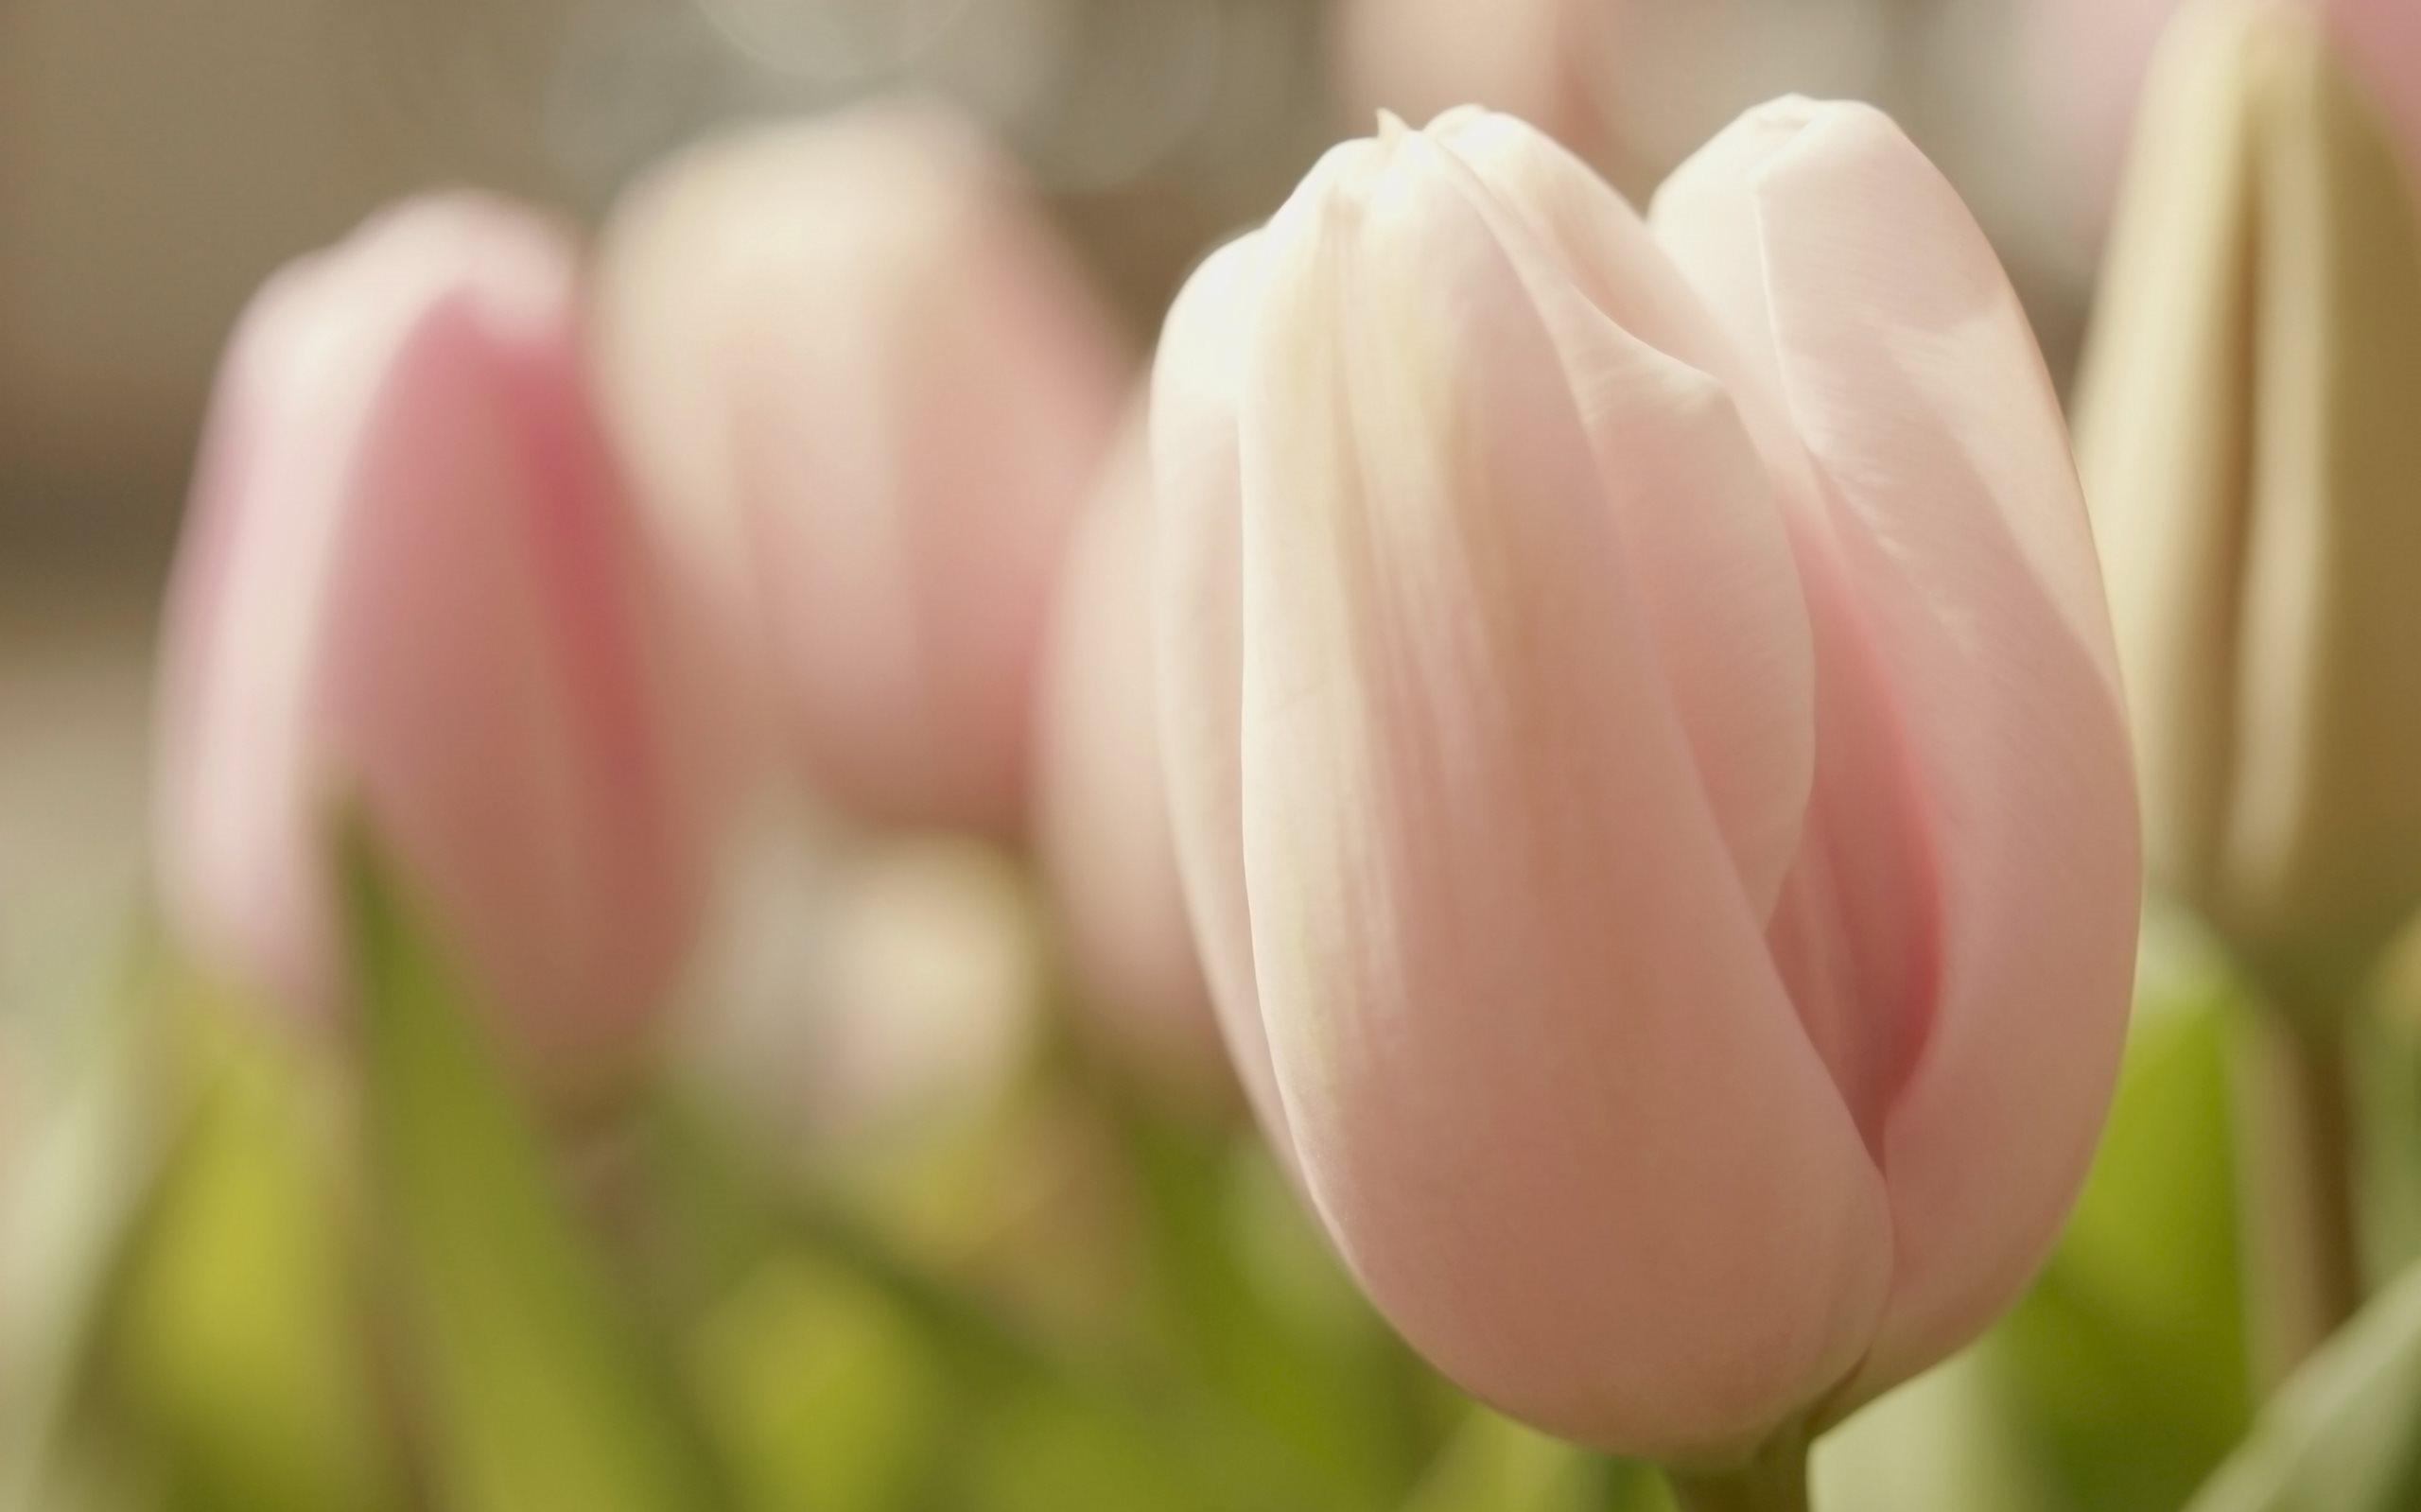 Download wallpapers tulips pink tulips flower field one tulip